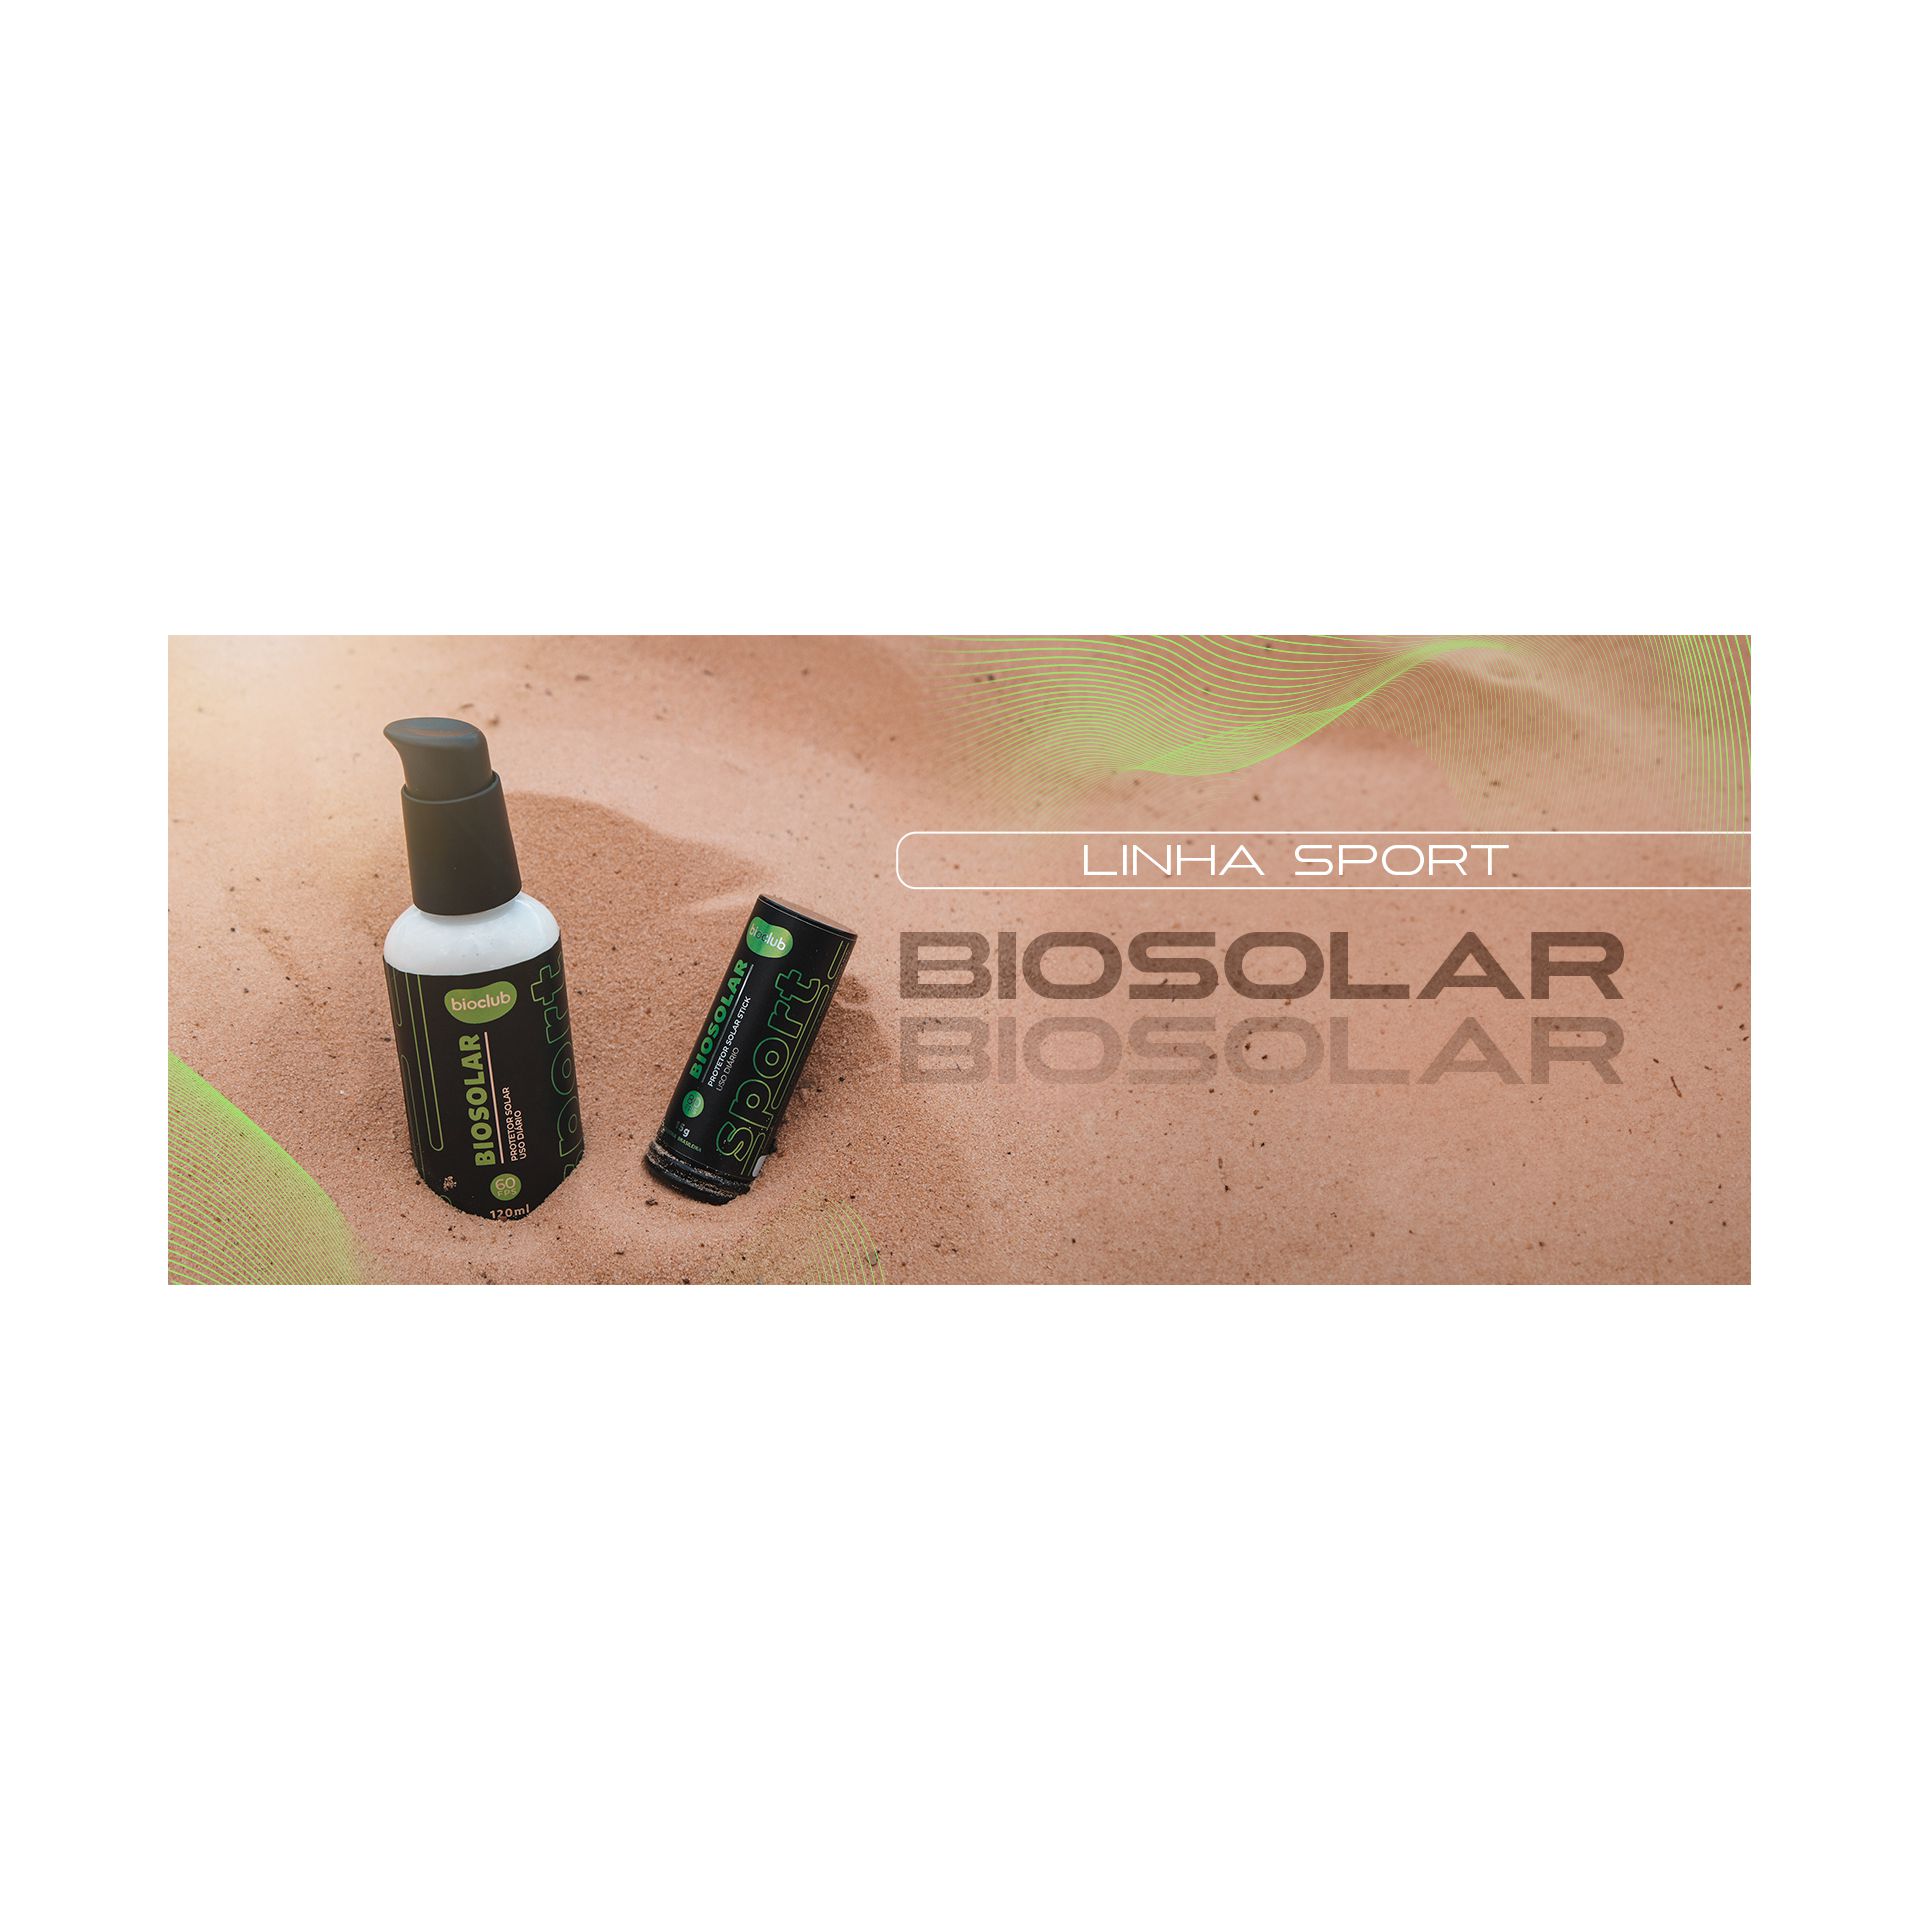 BioSolar